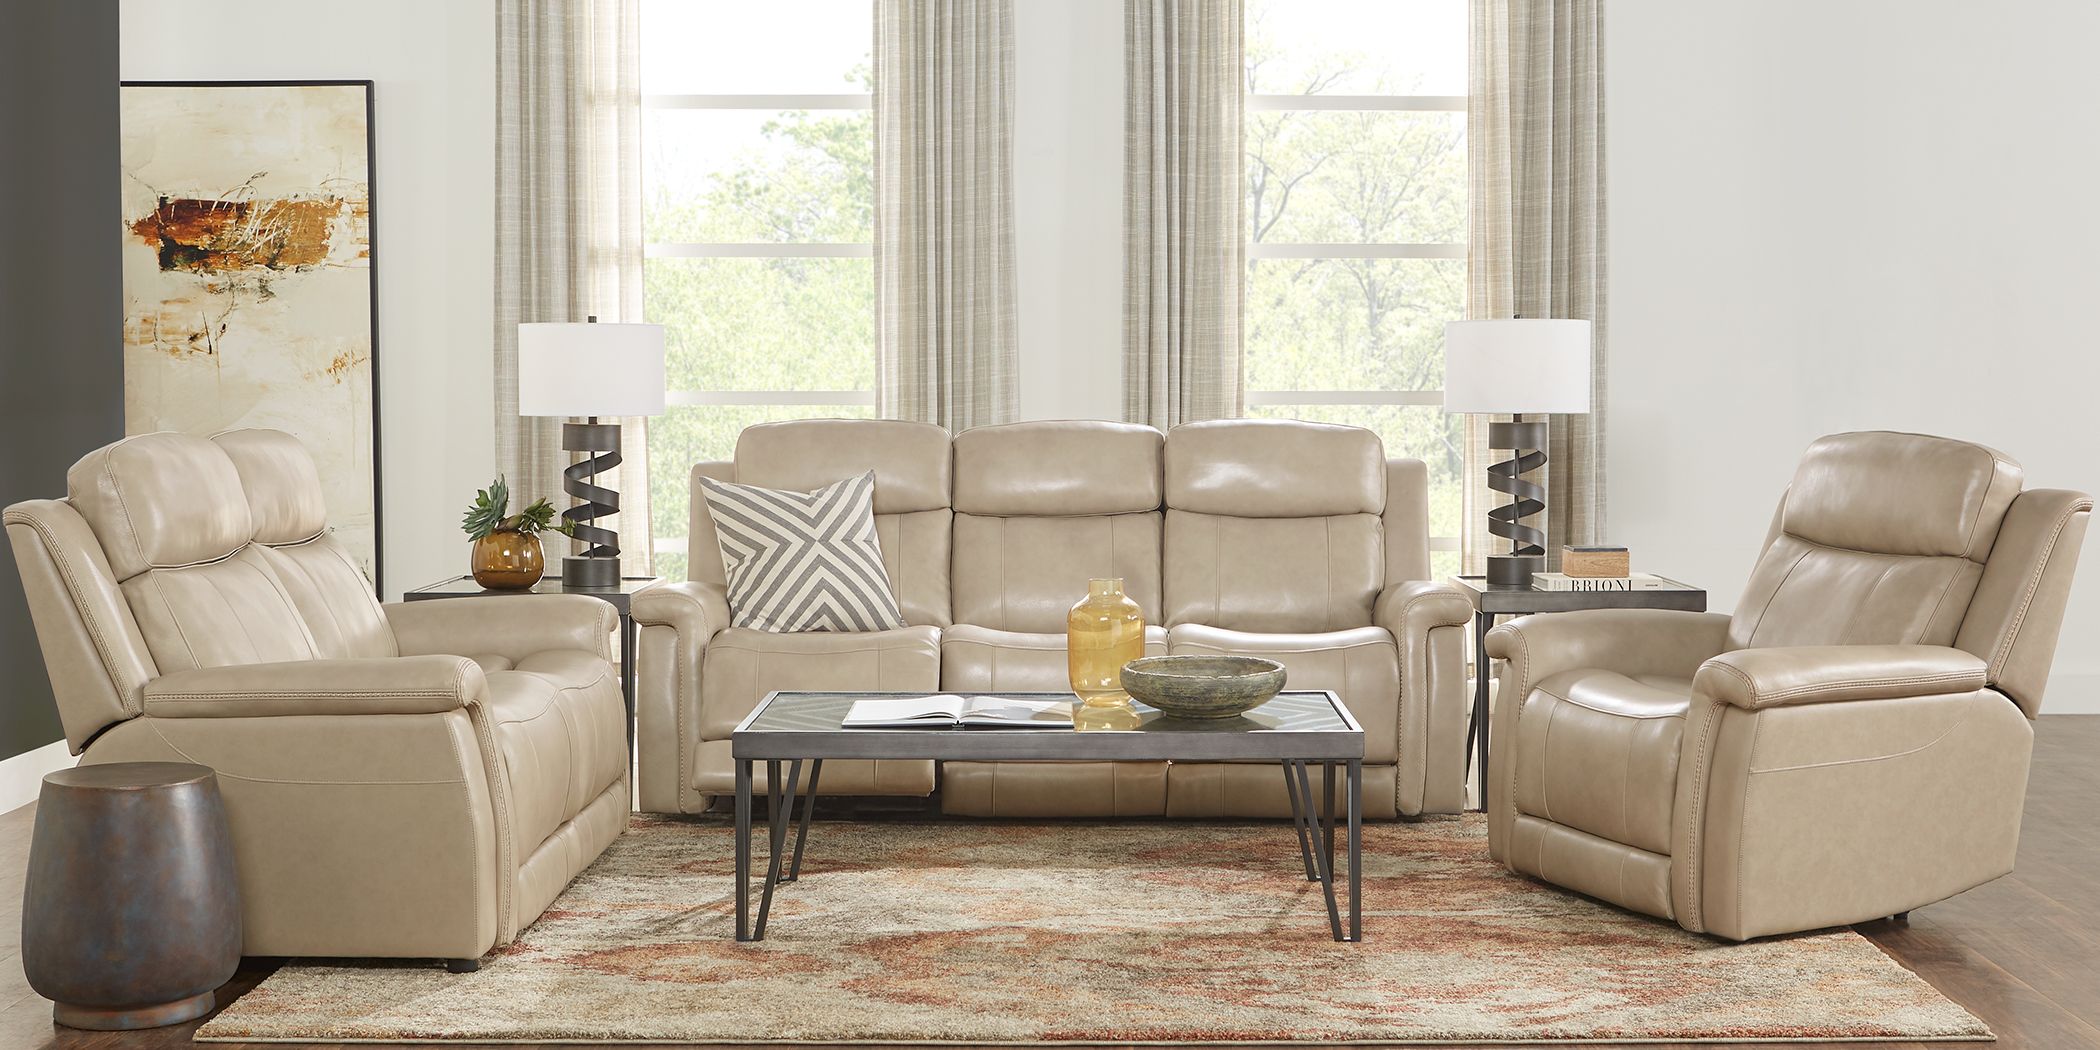 Beige Leather Living Room Sets Sofas, Real Leather Living Room Furniture